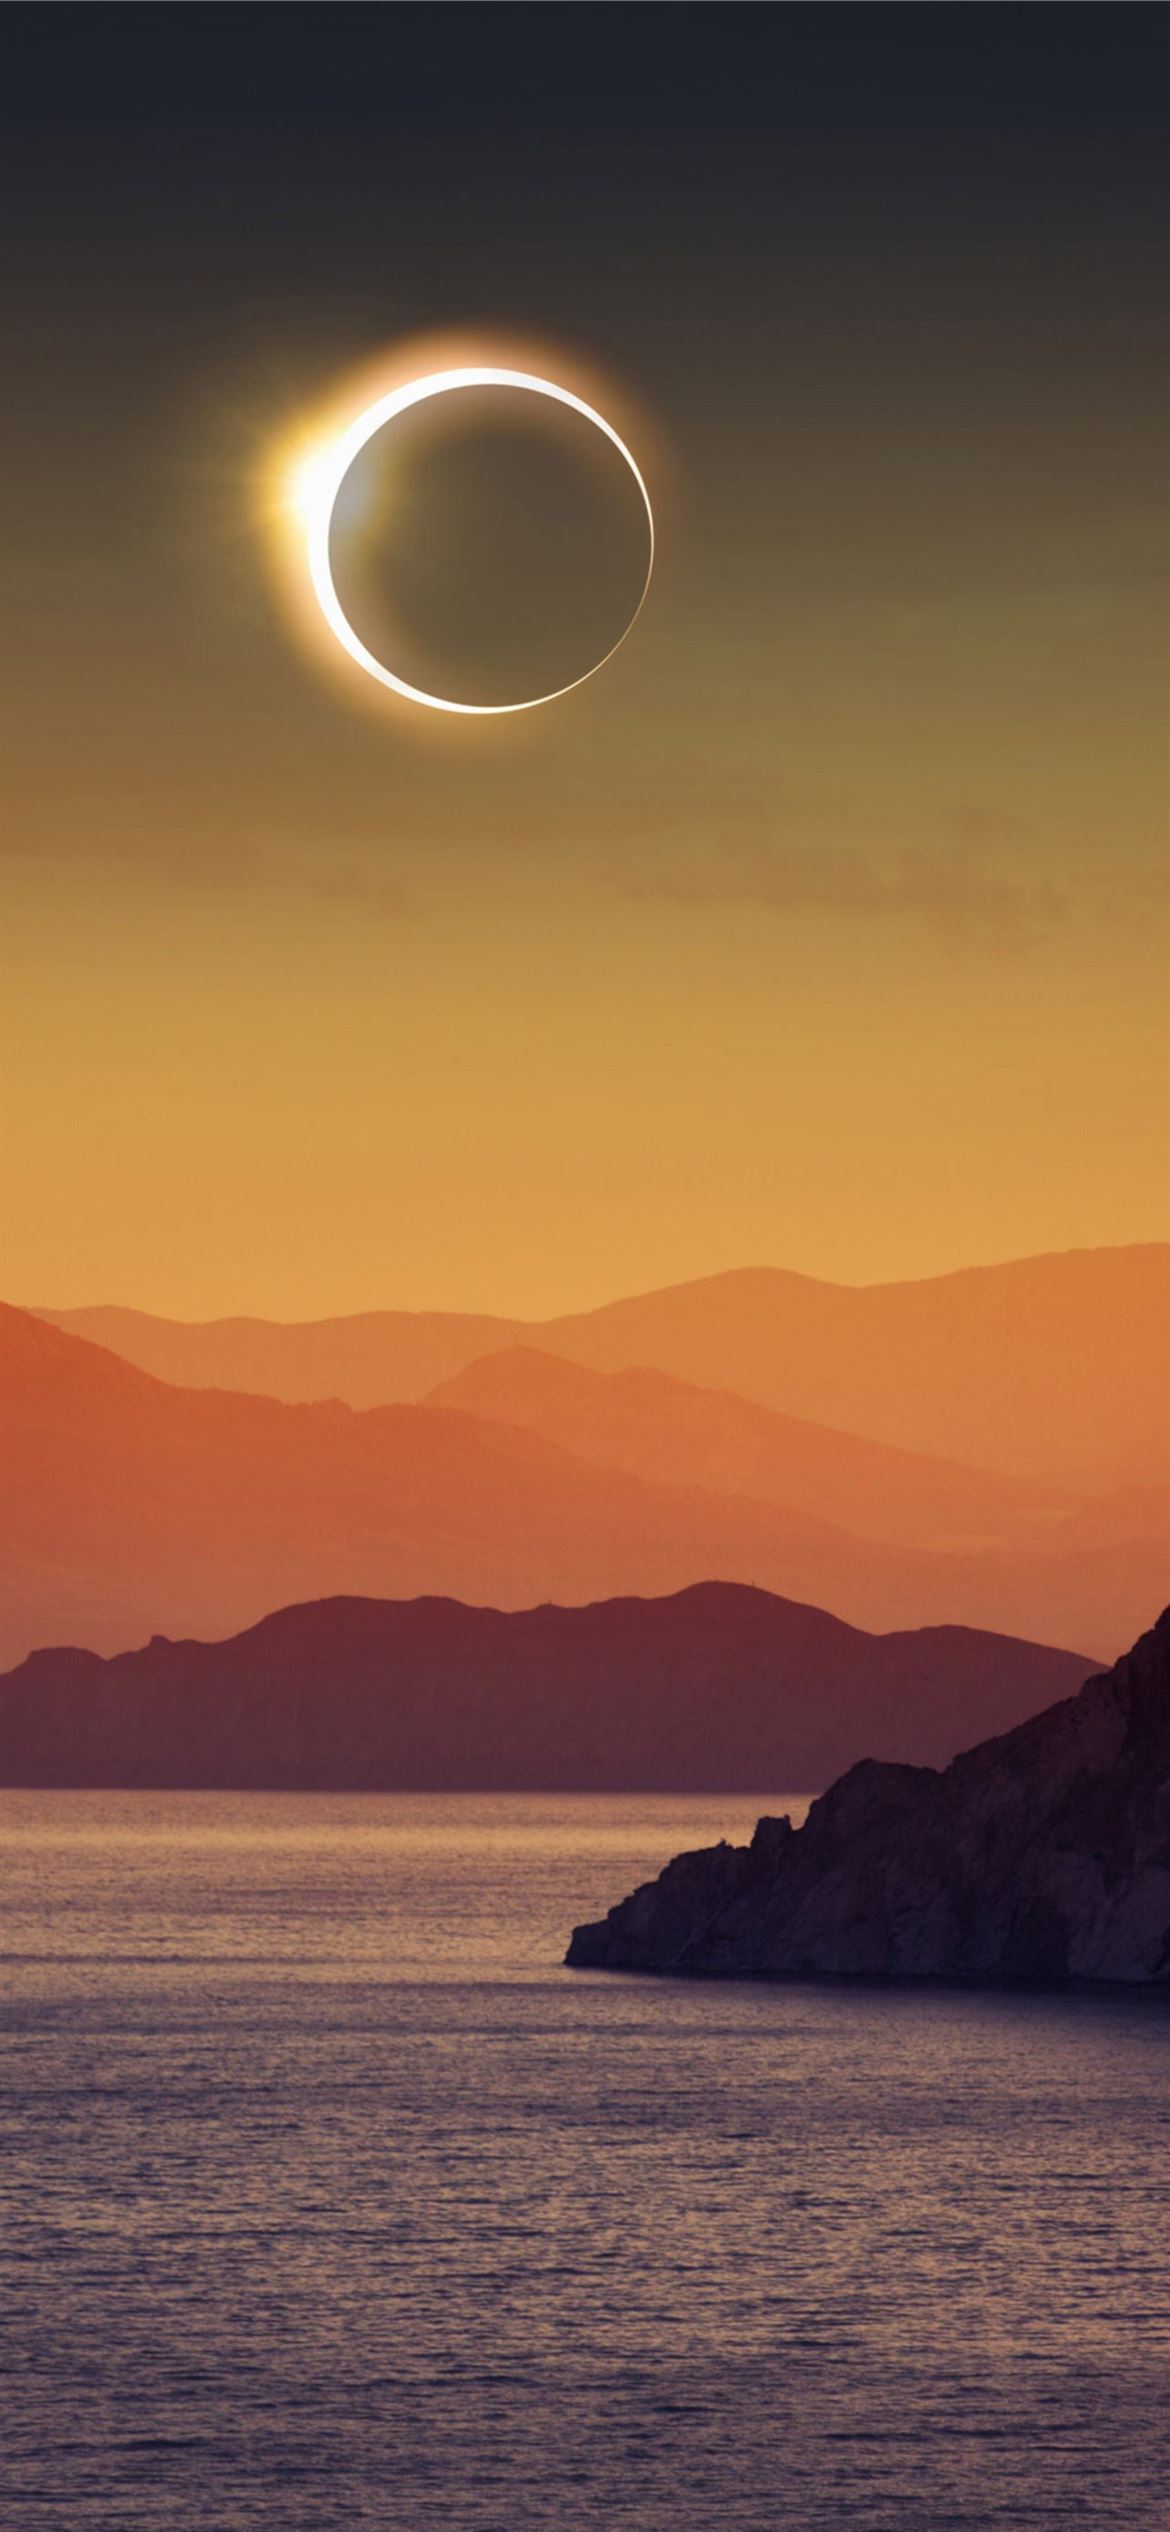 Lunar eclipse wallpaper by TheGrzebol  Download on ZEDGE  fd8a